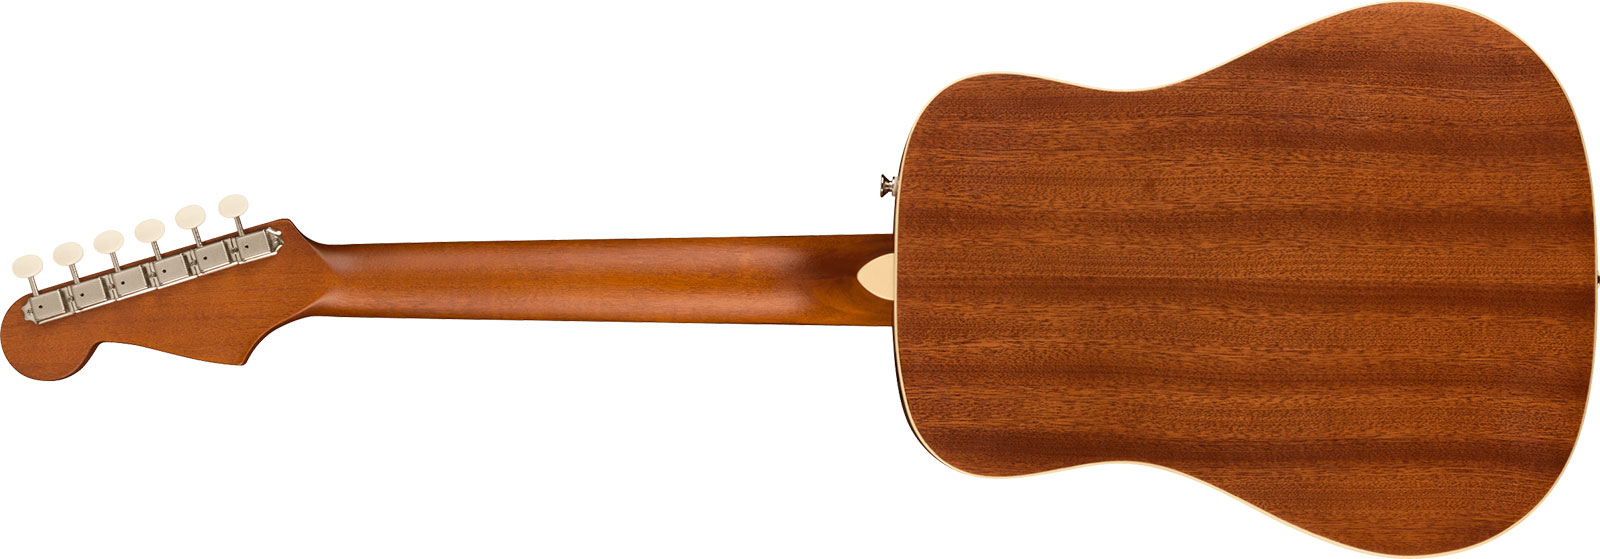 Fender Redondo Mini California Ltd Dreadnought 1/2 Epicea Acajou Noy - Black Top - Western-Reisegitarre - Variation 1